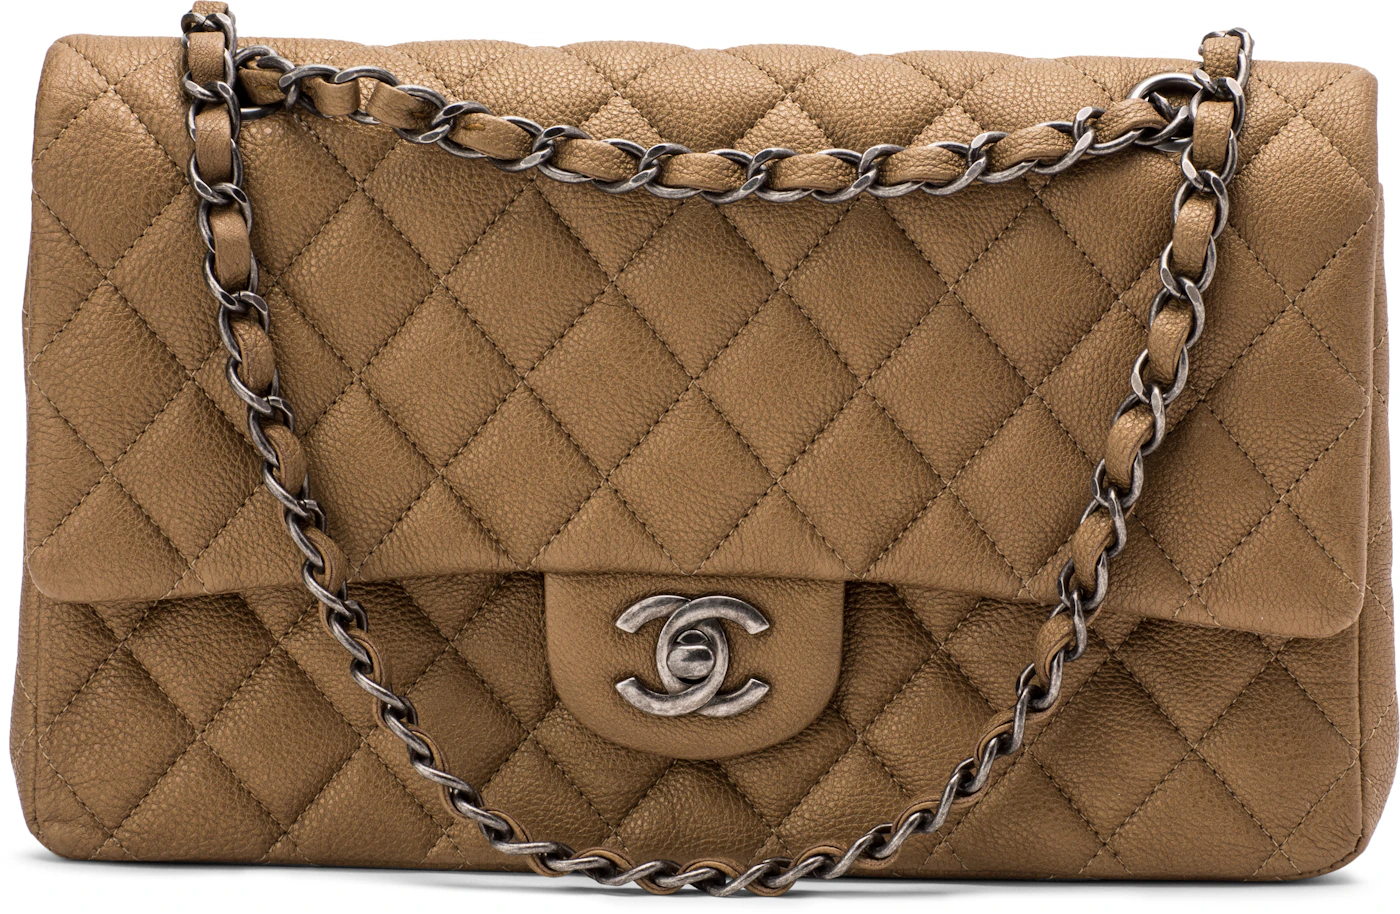 Luxmiila bags - RM27,500🔥 Chanel classic medium caviar